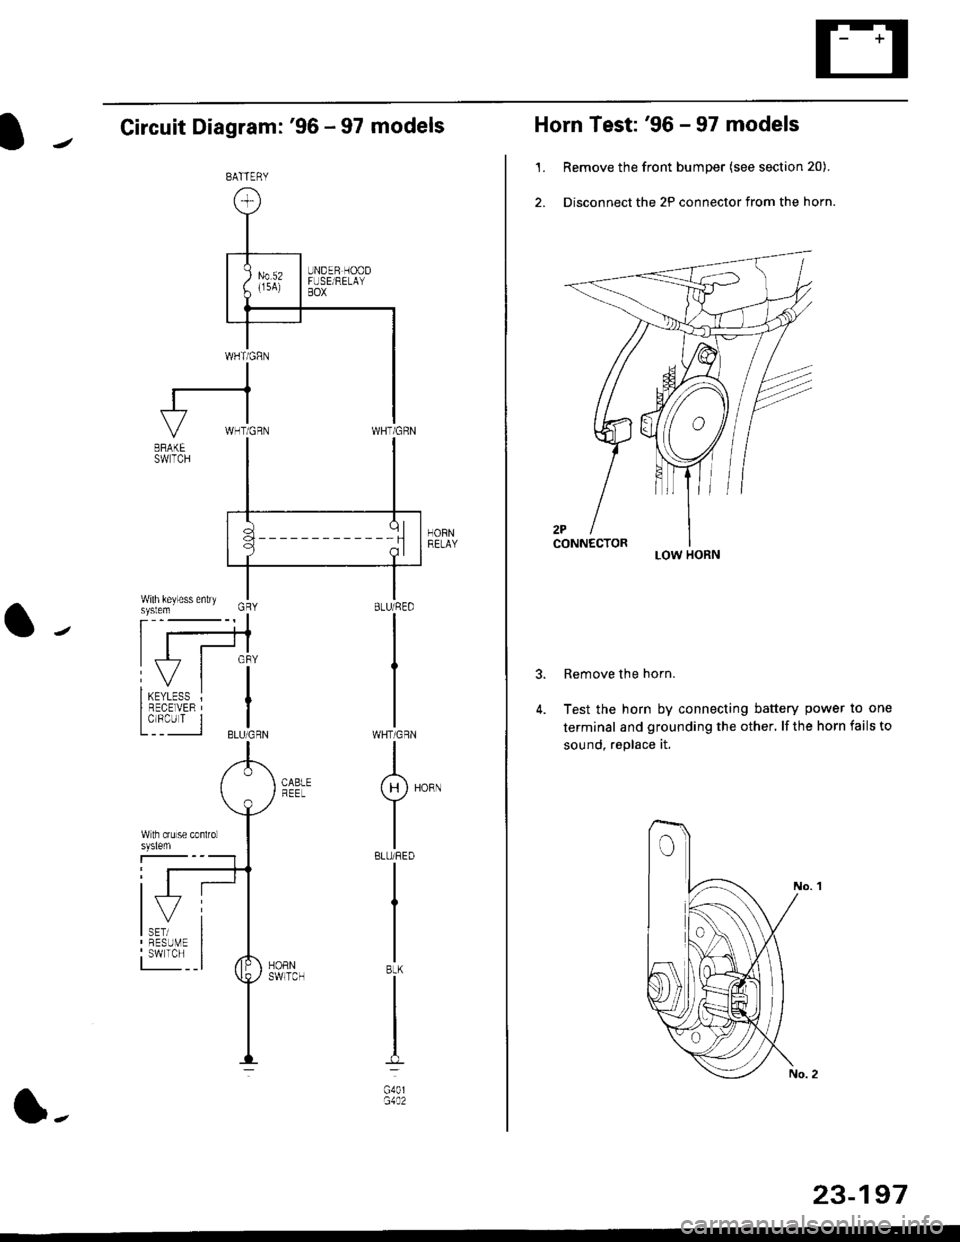 HONDA CIVIC 2000 6.G Workshop Manual Circuit Diagram: 96 - 97 models
HORNRELAY
WHT/GRN
I(H)HoRN
Y
IBLU/REO
I
I
IBtK
I
t-l
G40lG1A2
BATTERY
l-
23-197
Horn Test: 96 - 97 models
1. Remove the front bumper (see section 20).
2. Disconnect t